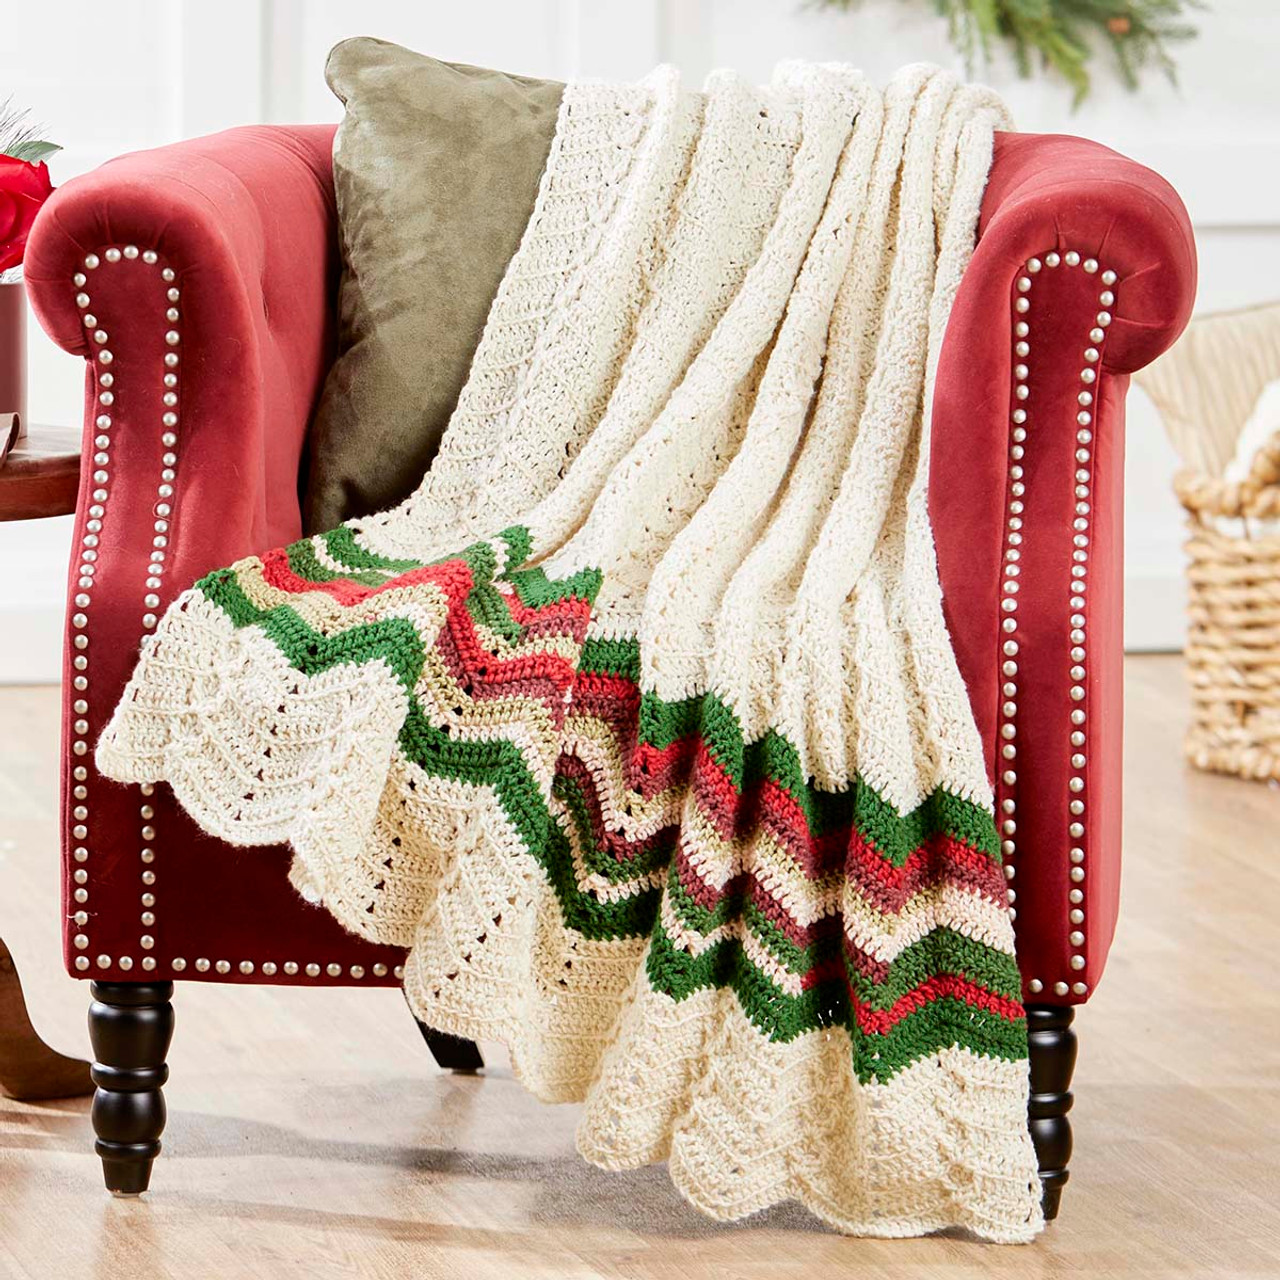 Herrschners BUY ALL 4 & SAVE - Seasonal Floral Dishcloths Crochet Kit